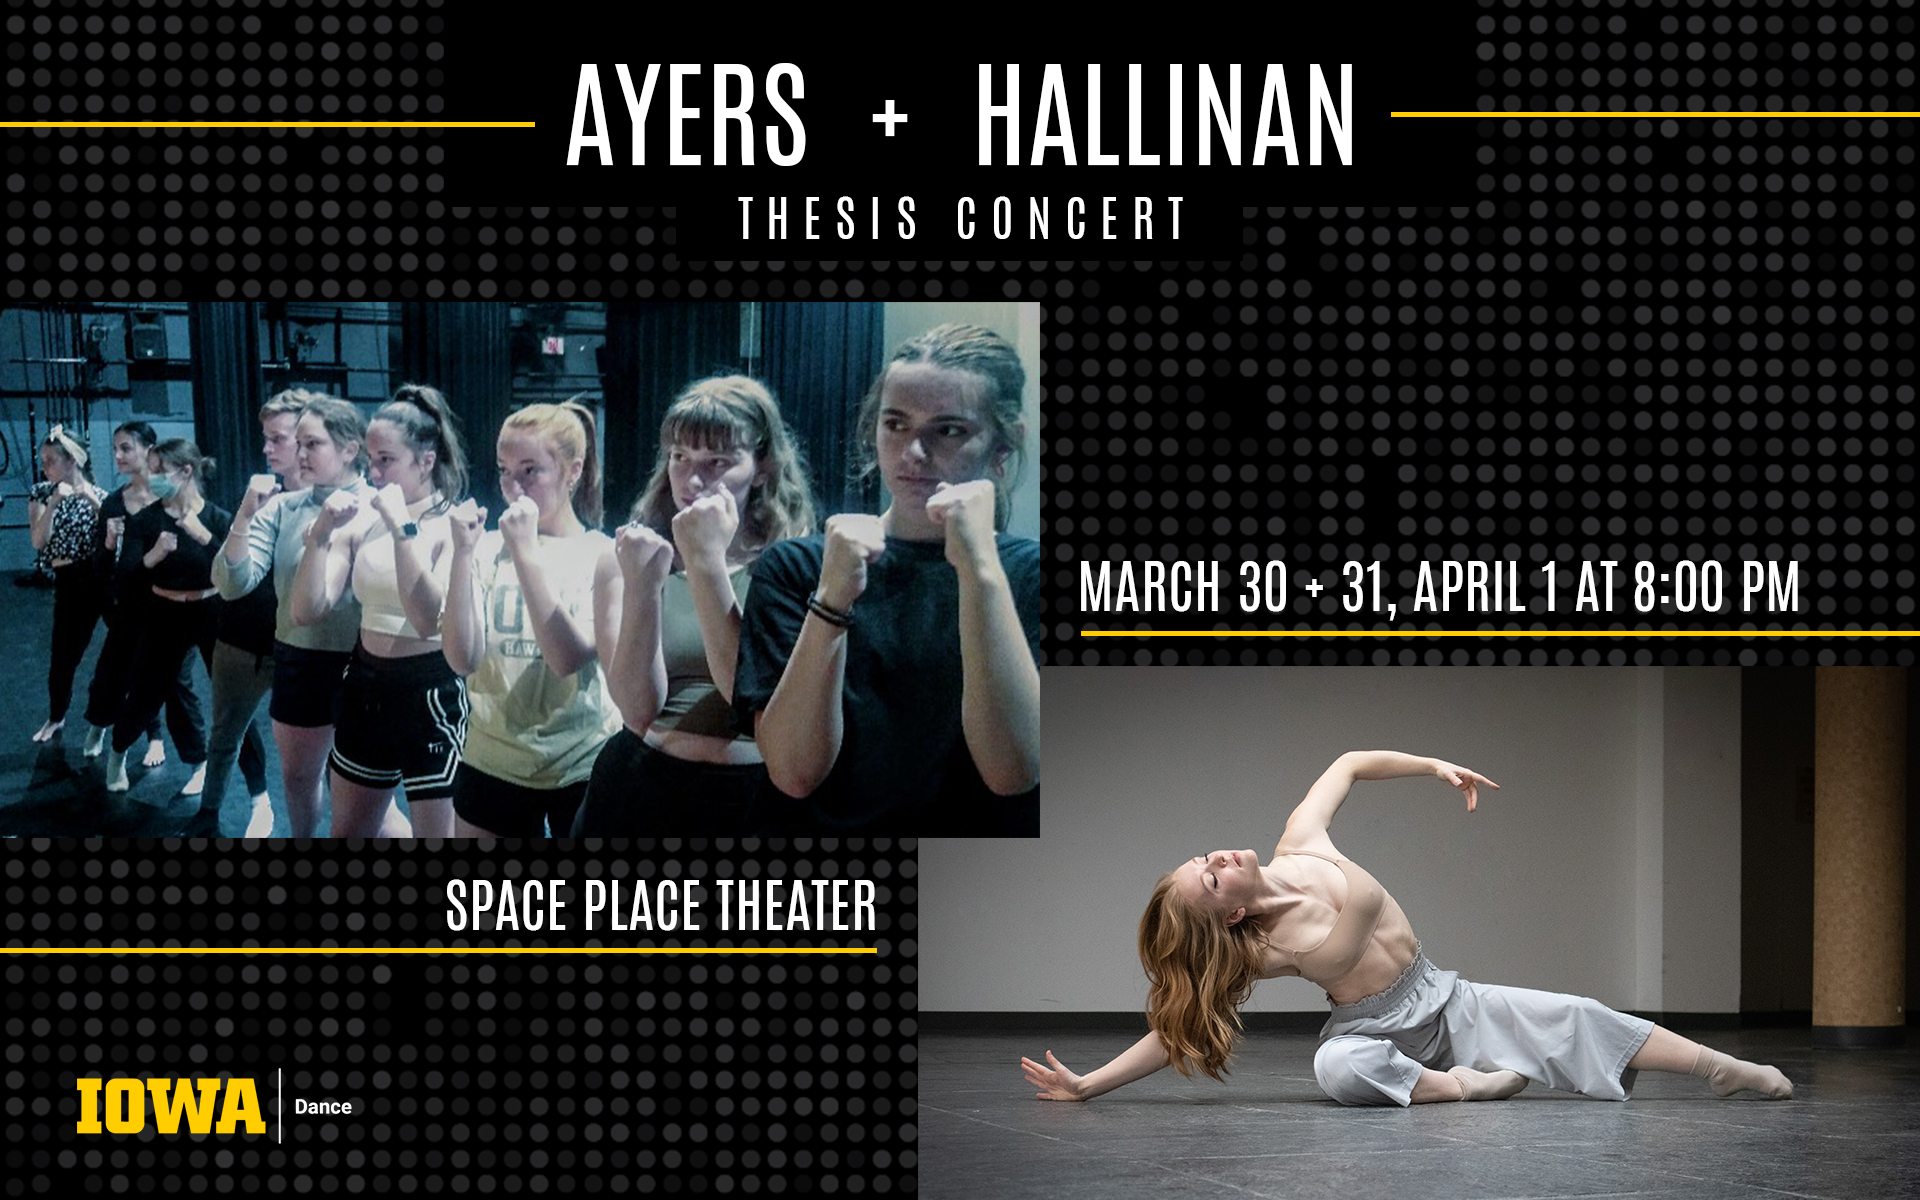 Ayers + Hallinan Thesis Concert